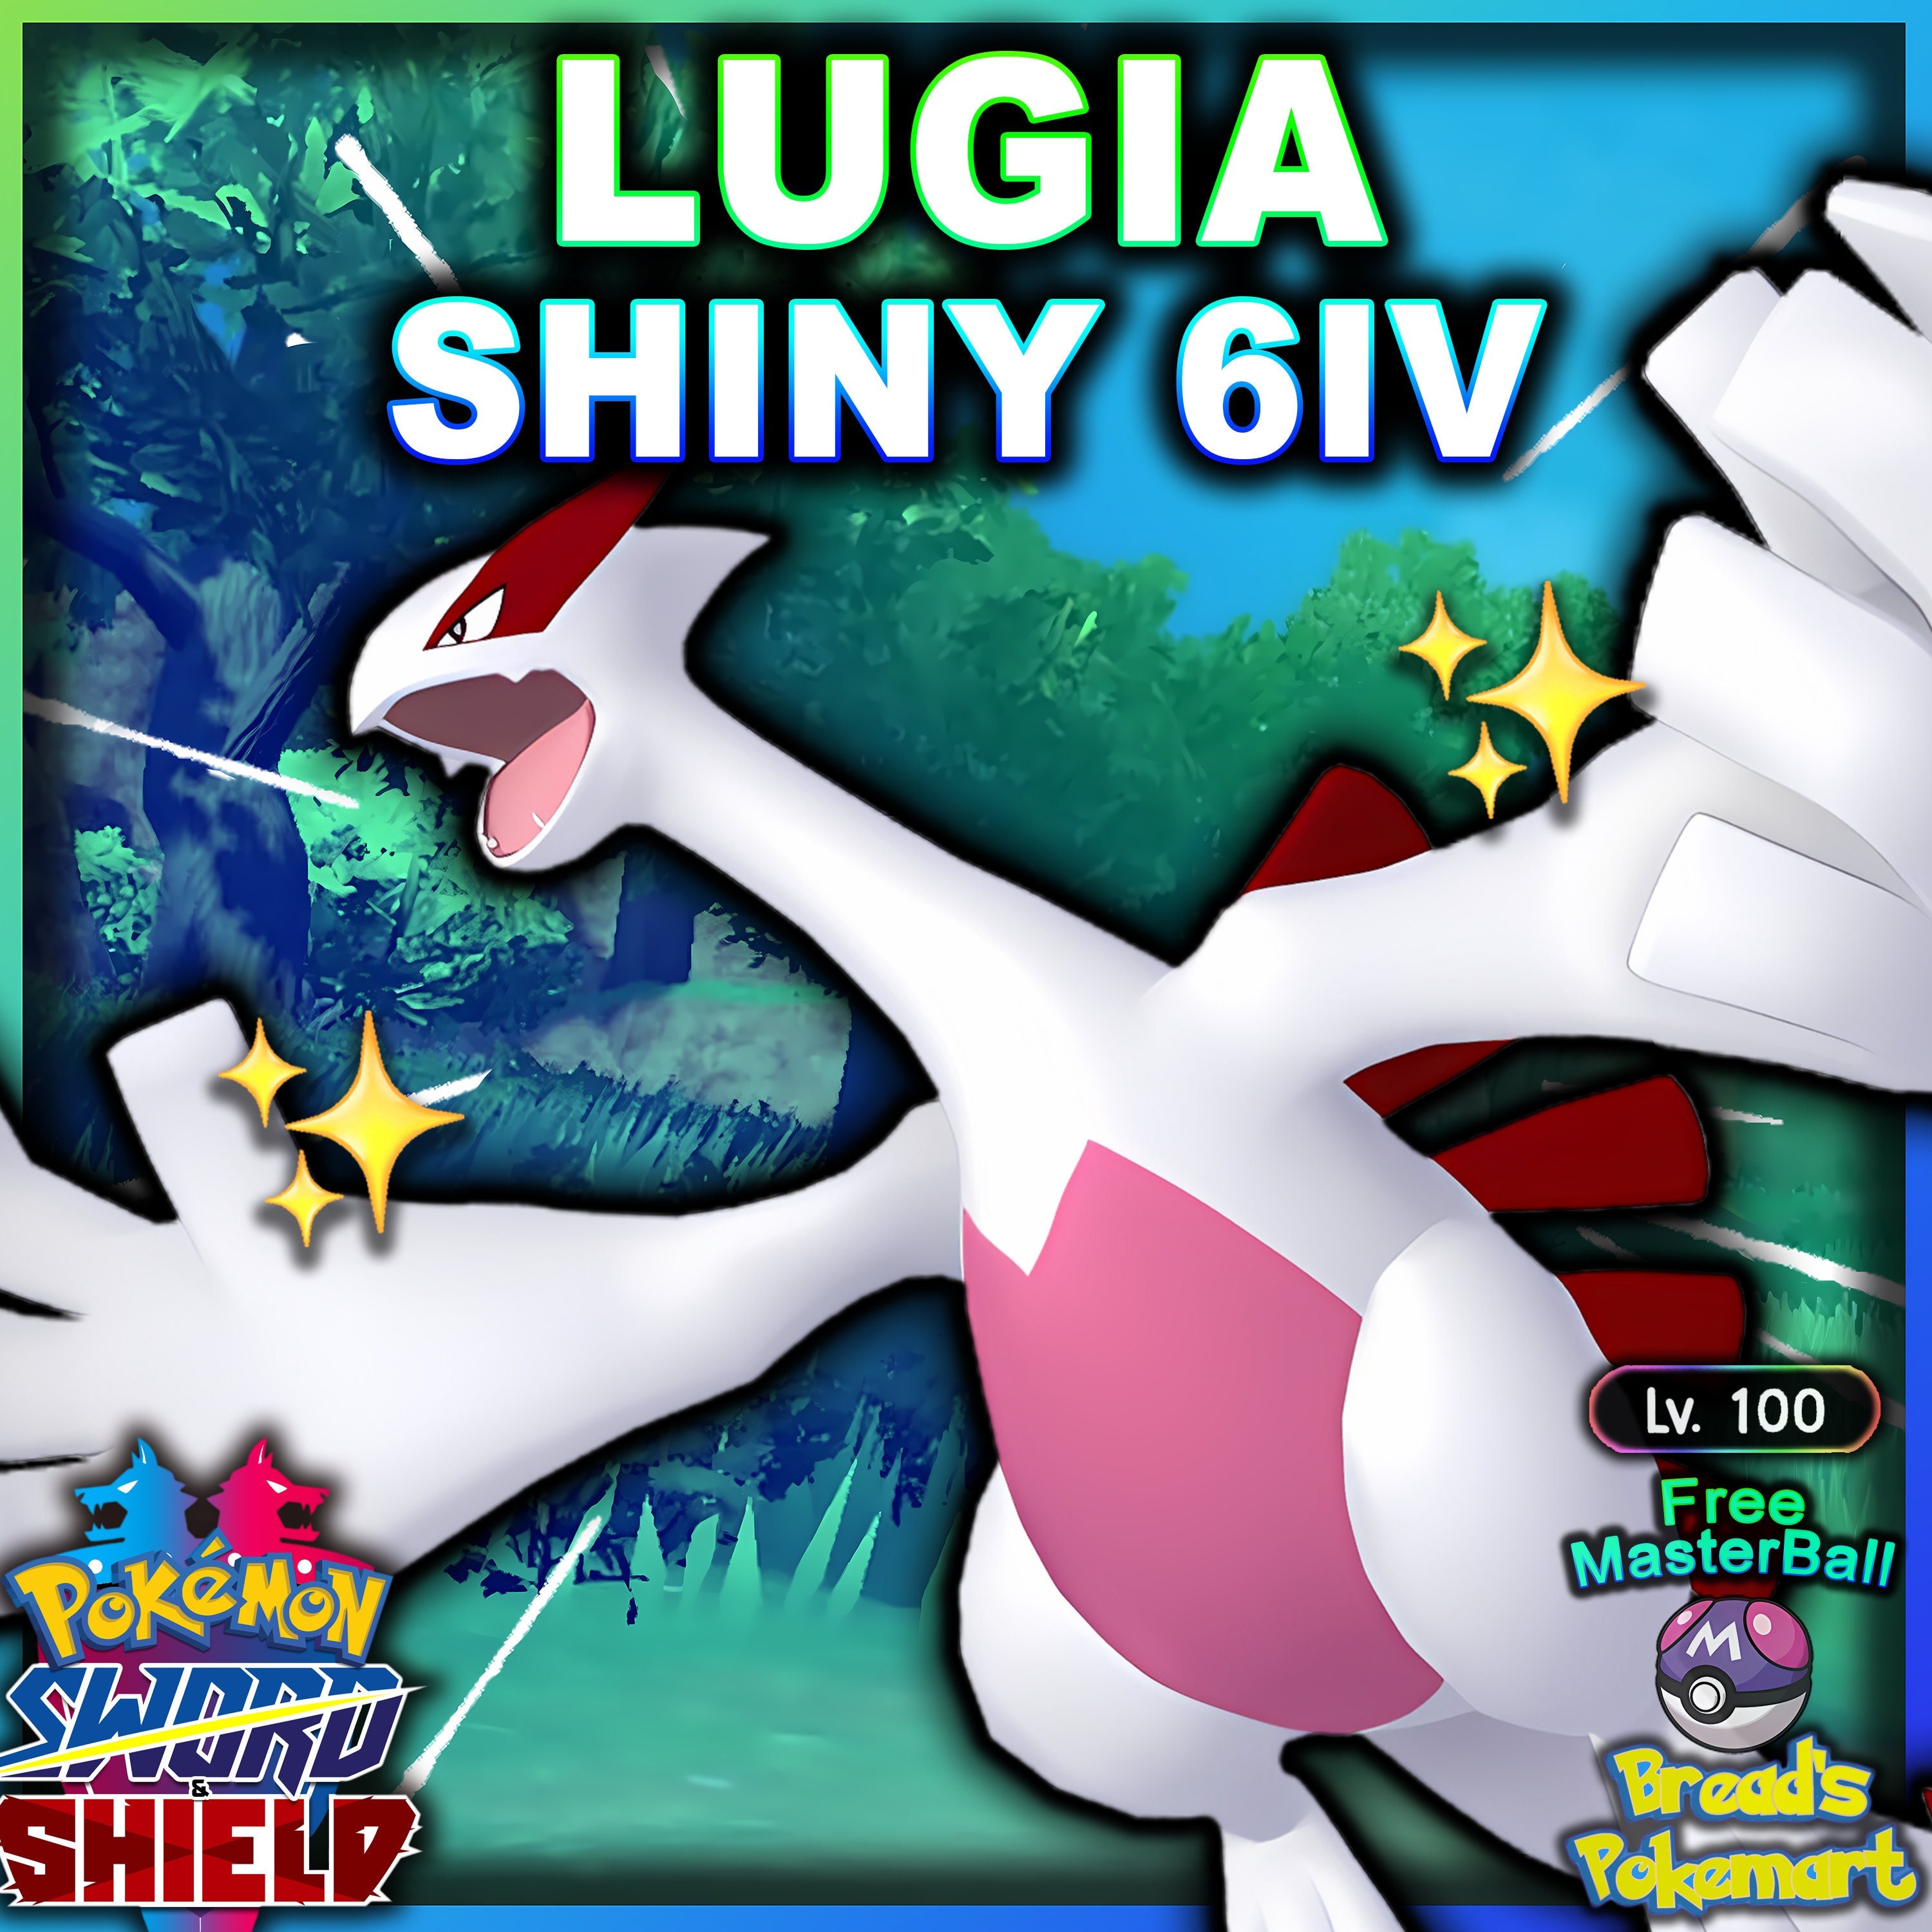 Ultra Shiny 6IV LUGIA / Pokemon Sword and Shield / Johto 